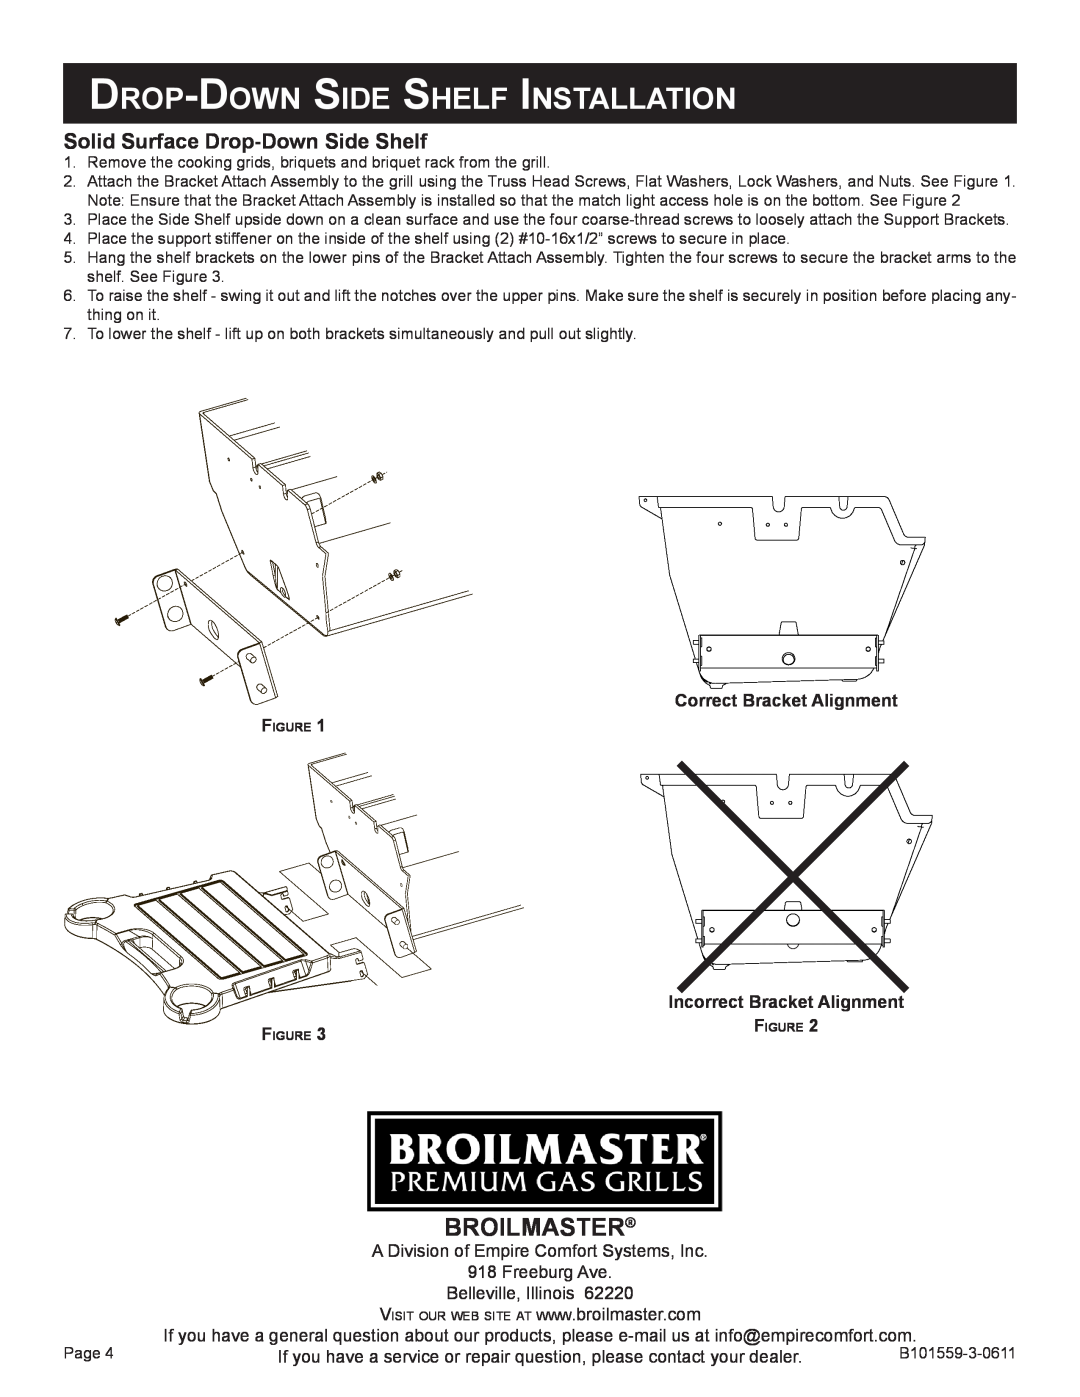 Broilmaster SKFB2-1, SKSS2-1, SKFPB2-1 Broilmaster, Solid Surface Drop-Down Side Shelf, Drop-Down Side Shelf Installation 